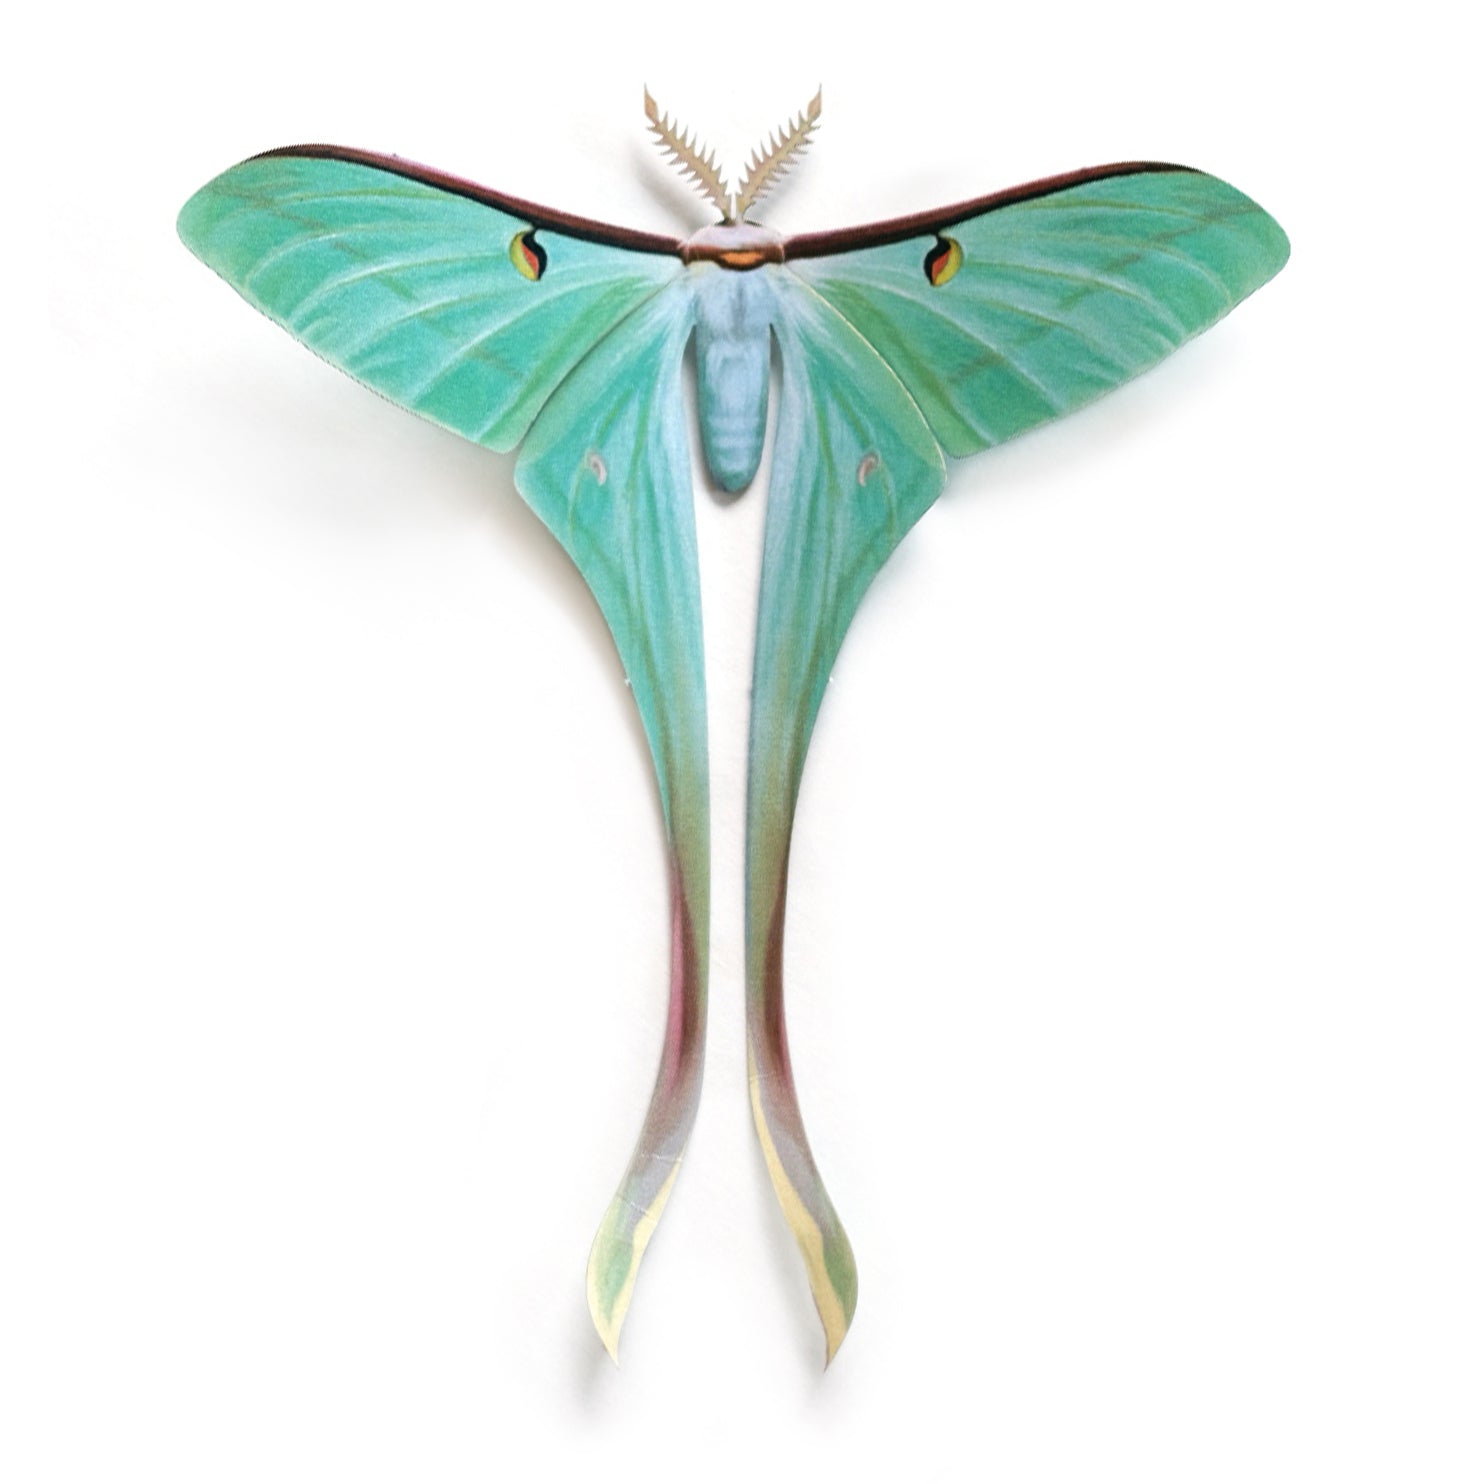 'Female Chinese Moon' moth